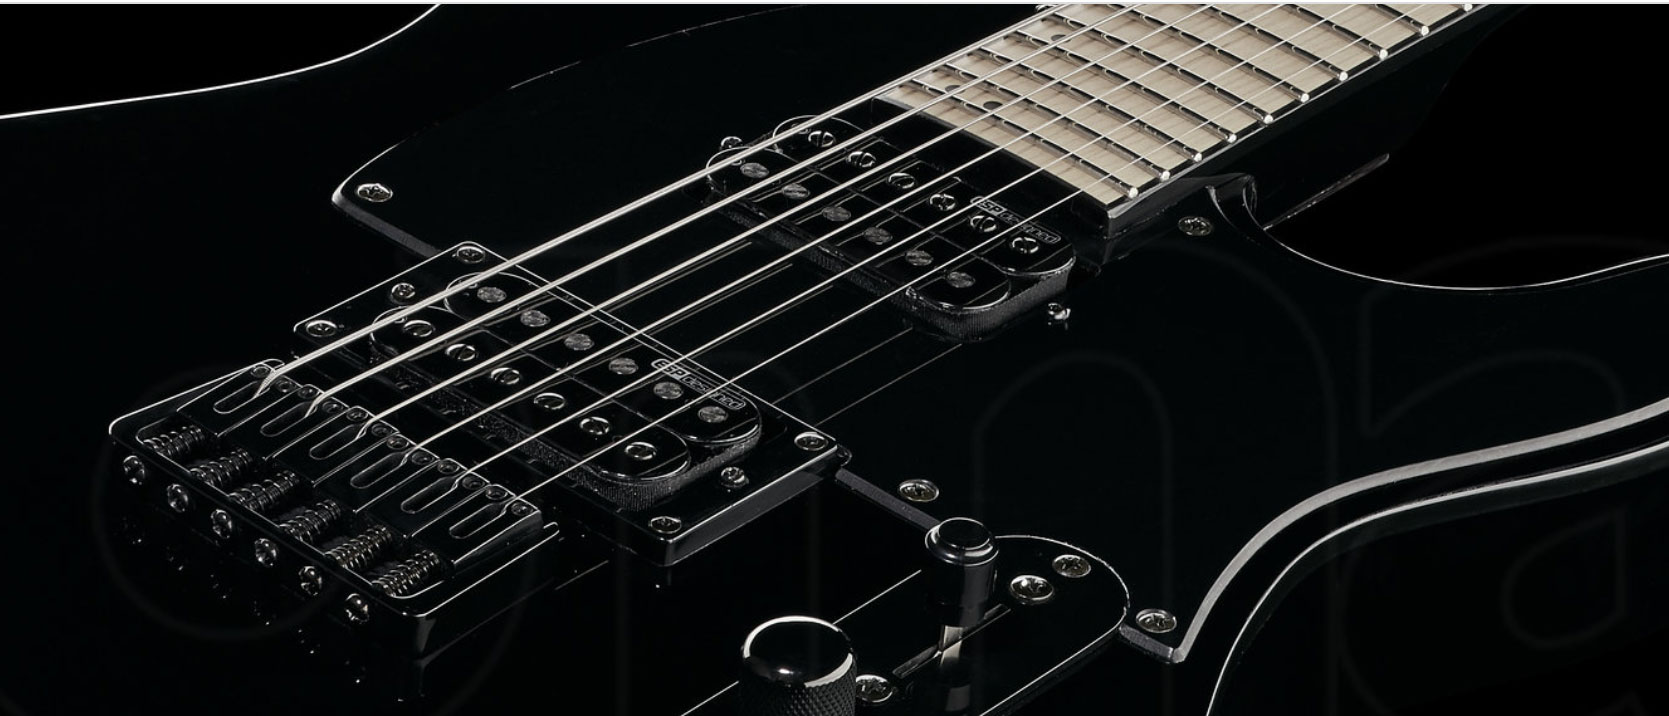 Ltd Te-200m Hh Ht Mn - Black - Televorm elektrische gitaar - Variation 2